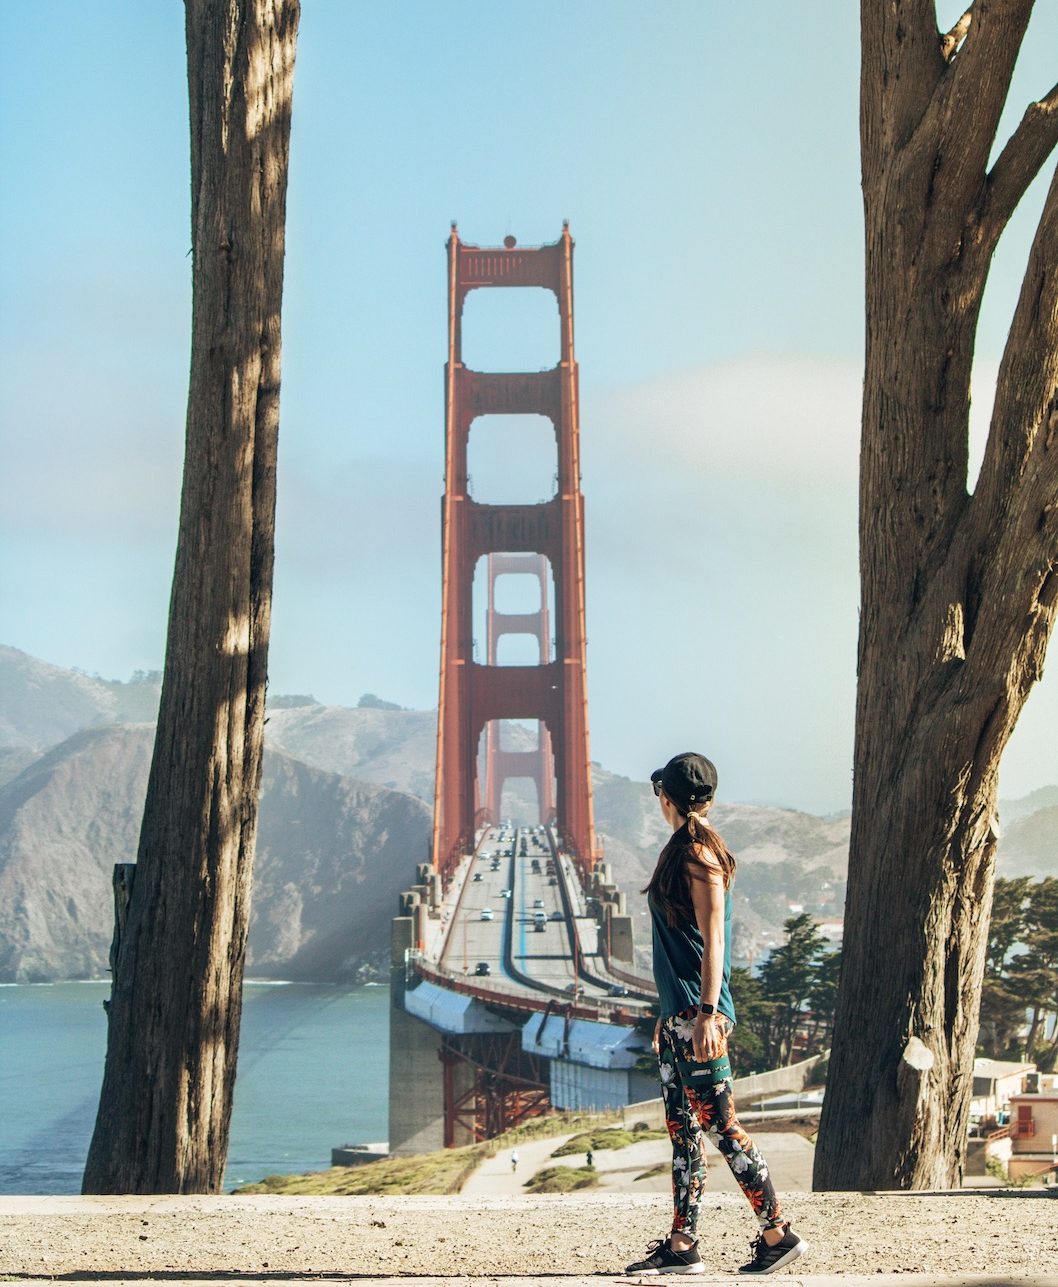 Golden Gate Overlook - San Francisco, California